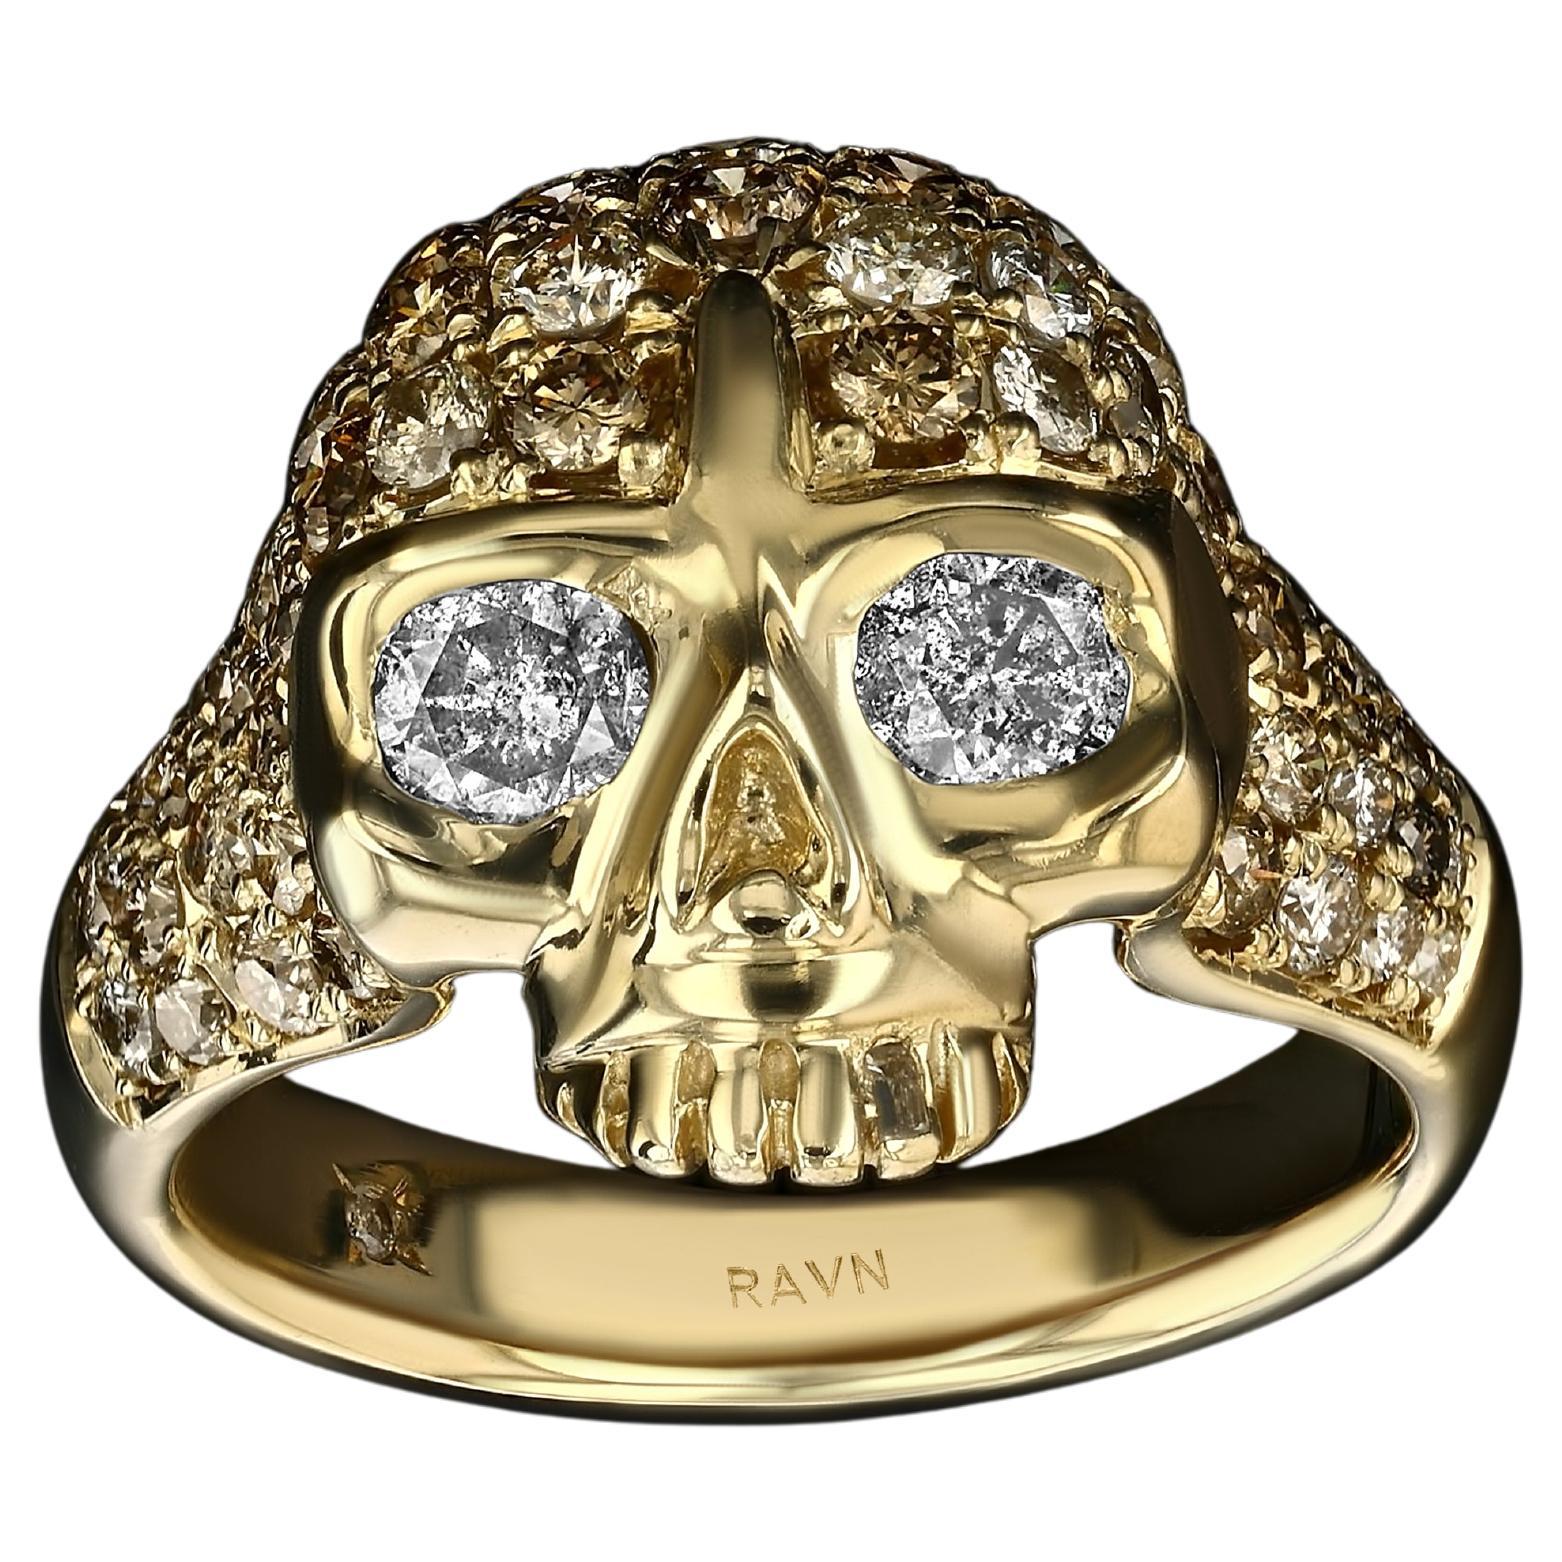 House of RAVN, 18k Gold Hand geschnitzt Bling Petite Skull Ring mit Diamant-Augen